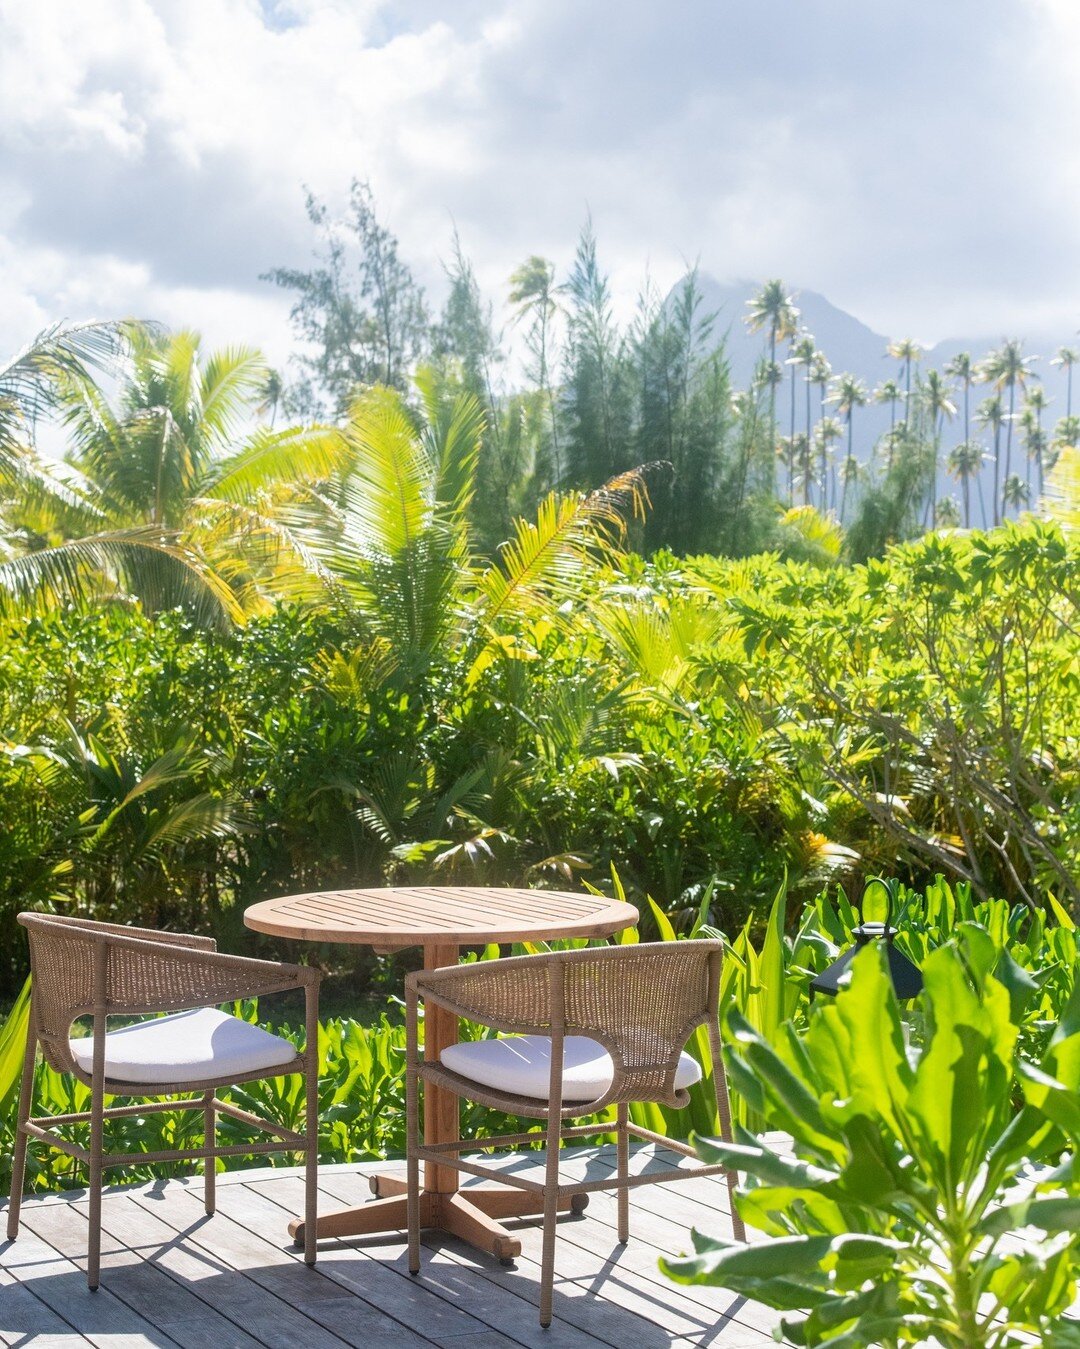 Perfect place for a rendez-vous under the coconut trees 🌴🌴🌴
.
.
.
.
#raiatea #privatemotu #tropicalparadise